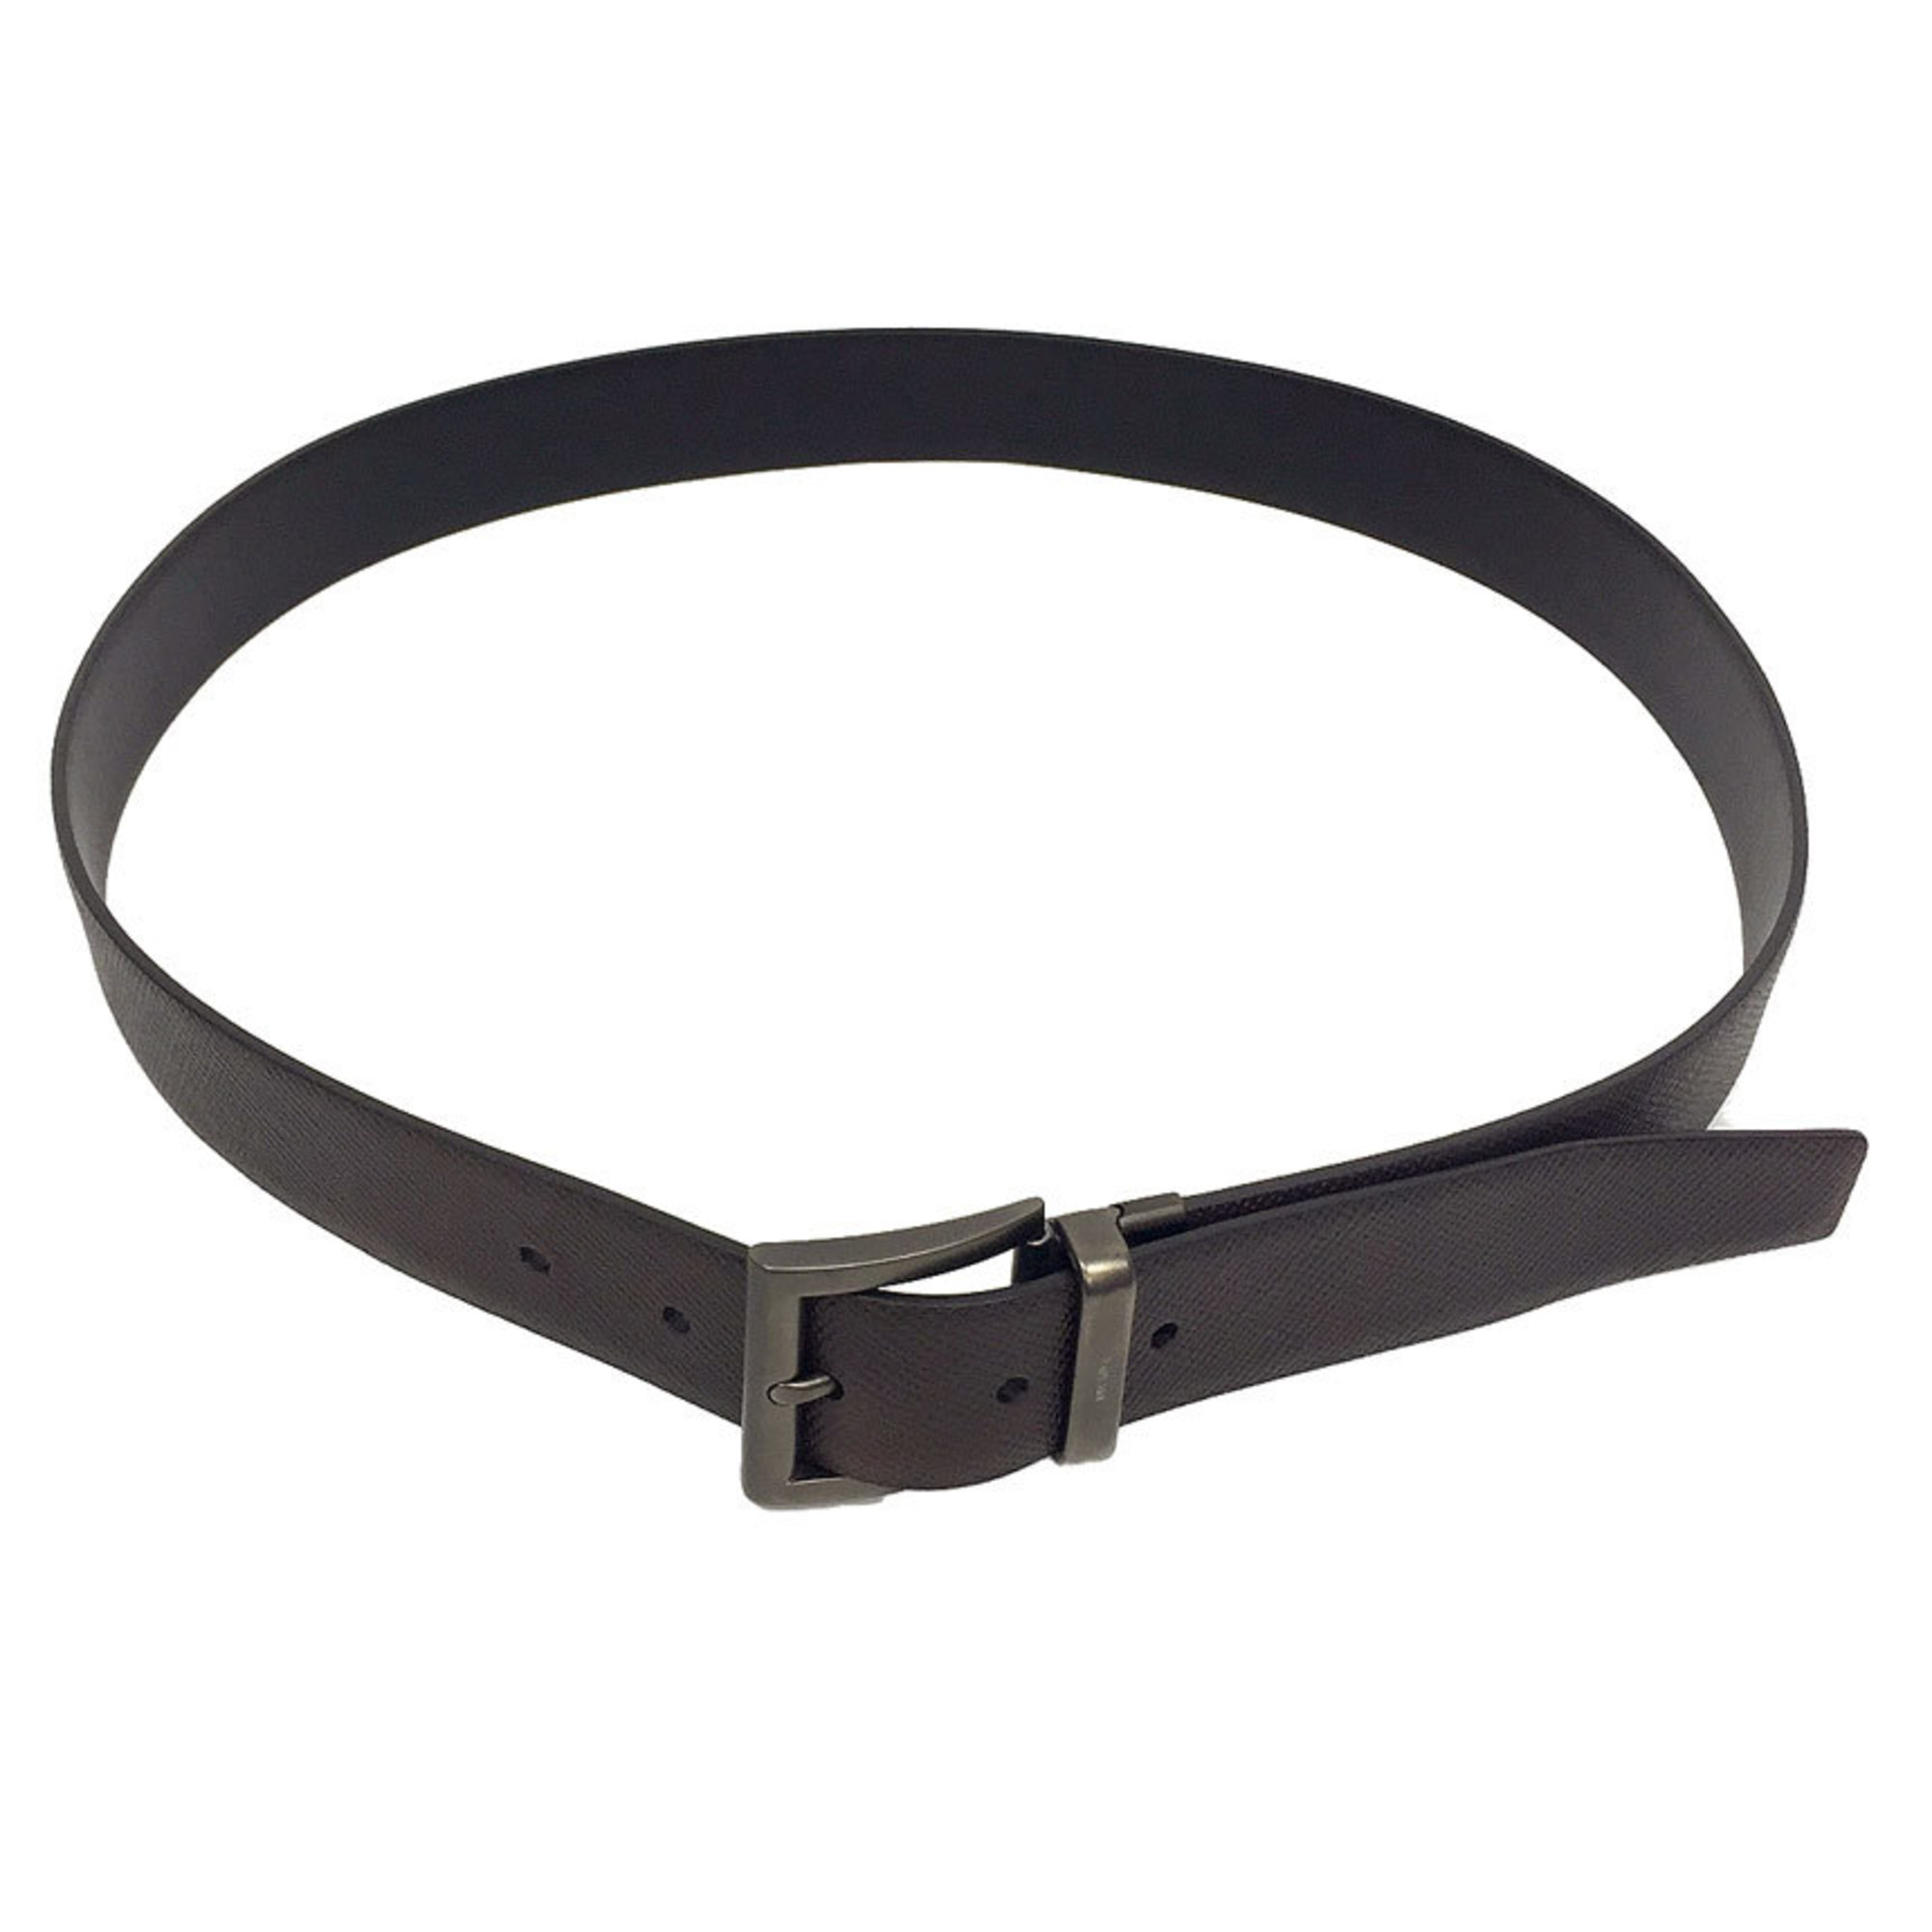 Prada PRADA leather belt size 95/38 brown gunmetal buckle aq7829